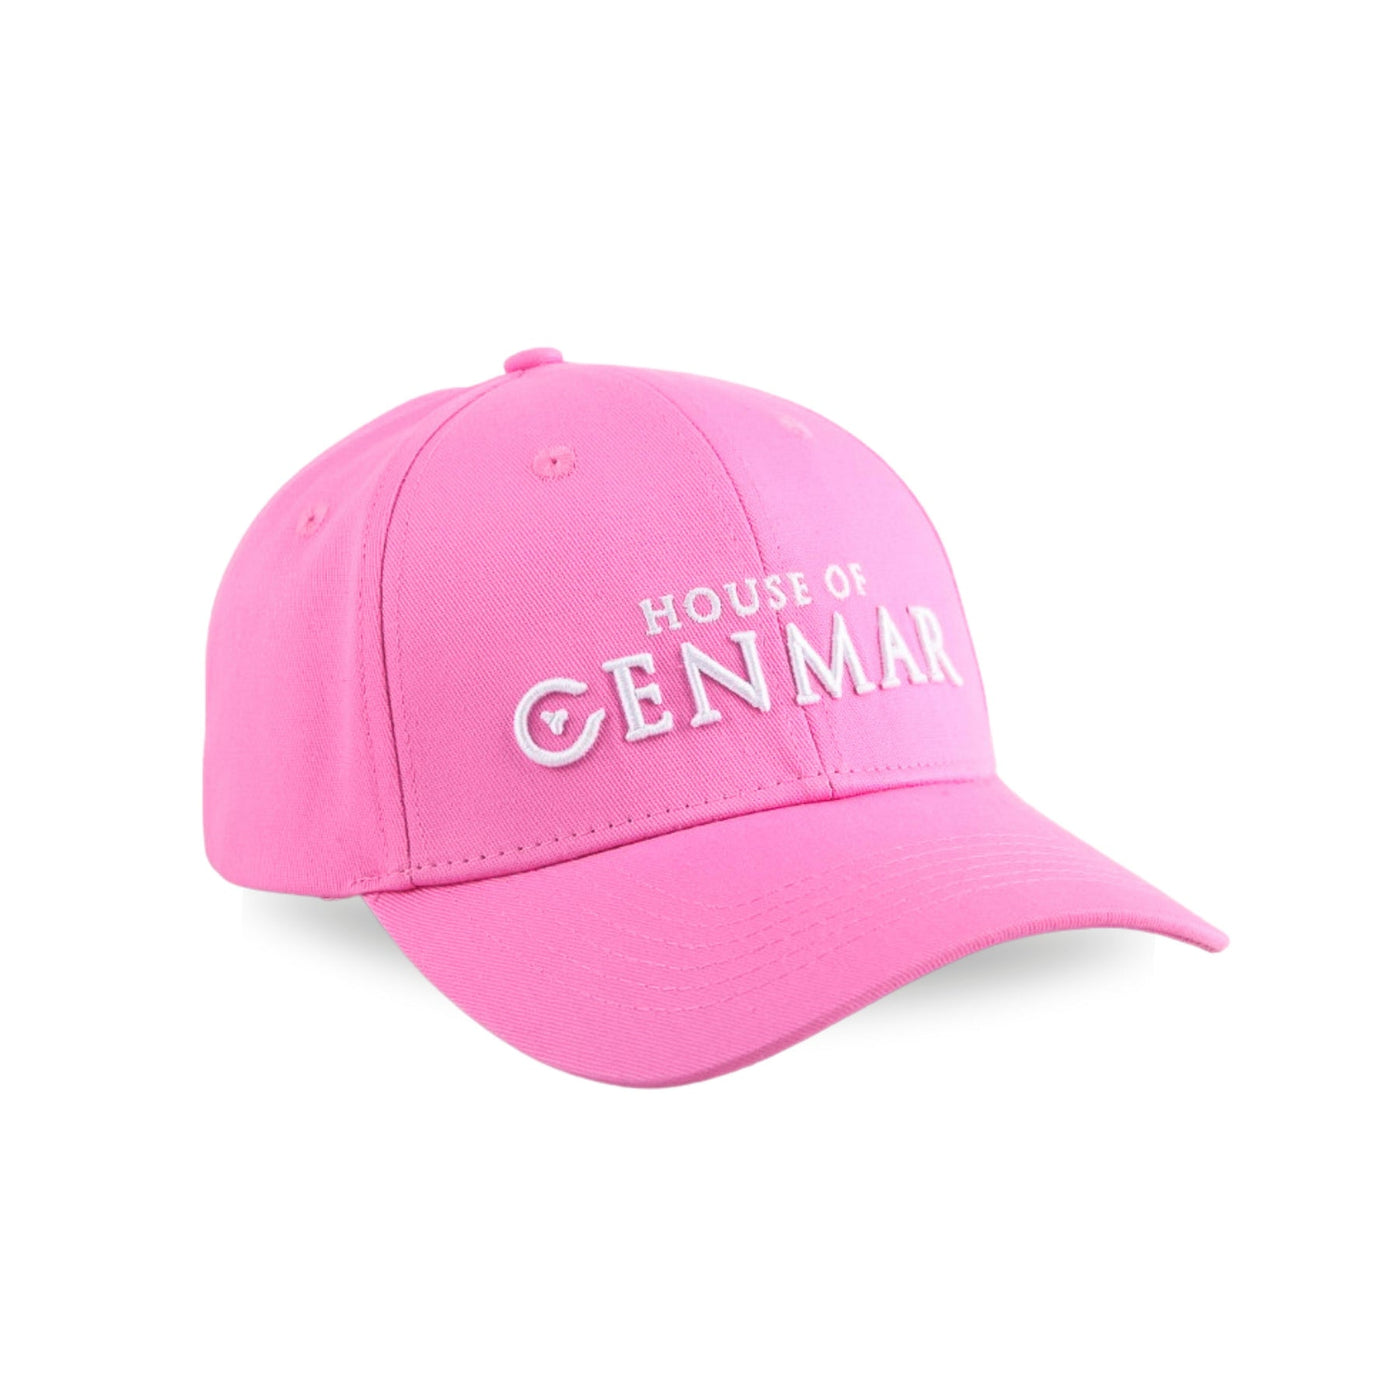 CENMAR PINK BASEBALL CAP